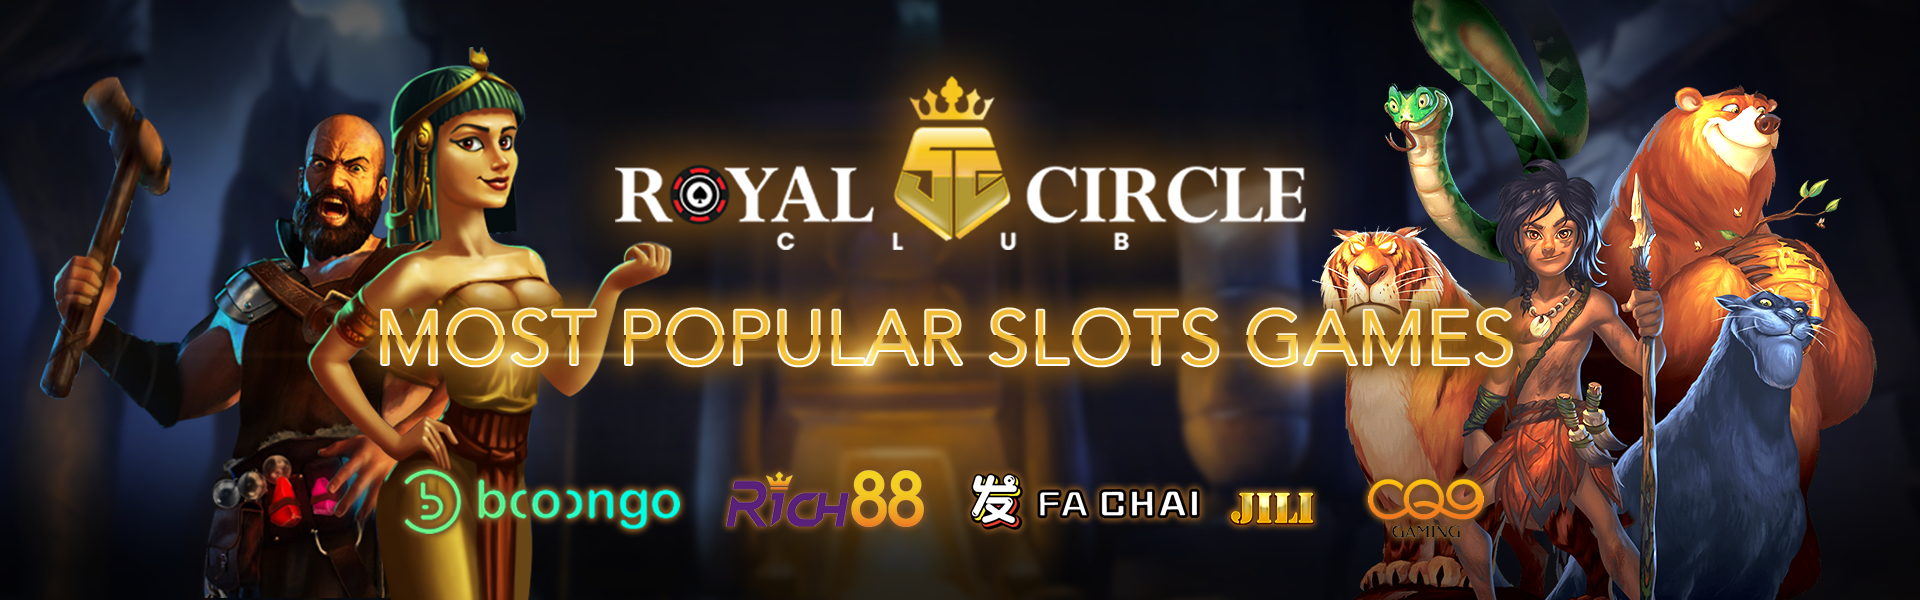 Royal Circle Club - Welcome 2 - royalcc1.com